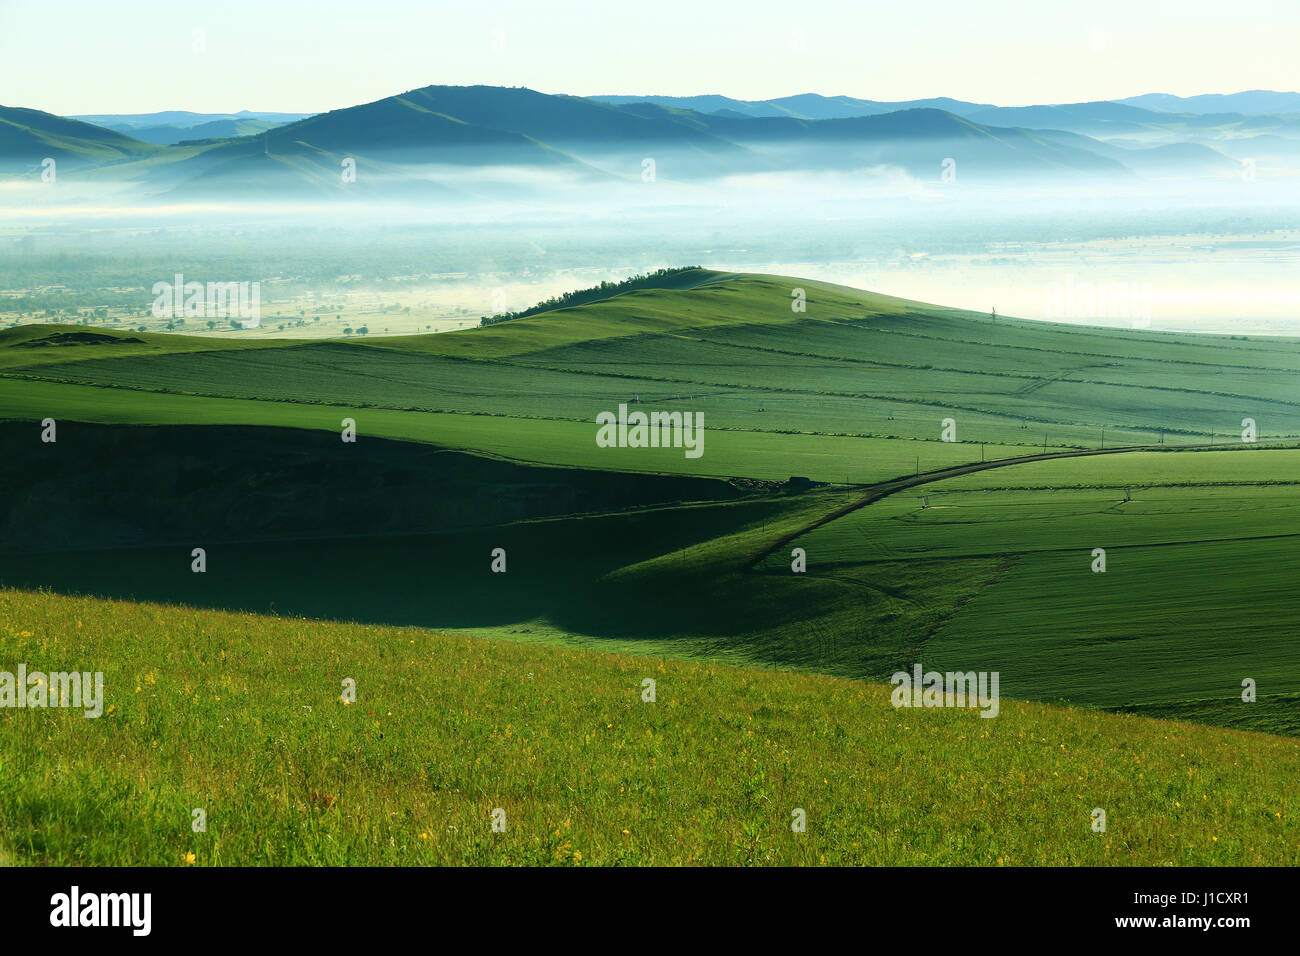 Hulun Buir Grassland scenery in Inner Mongolia Stock Photo - Alamy